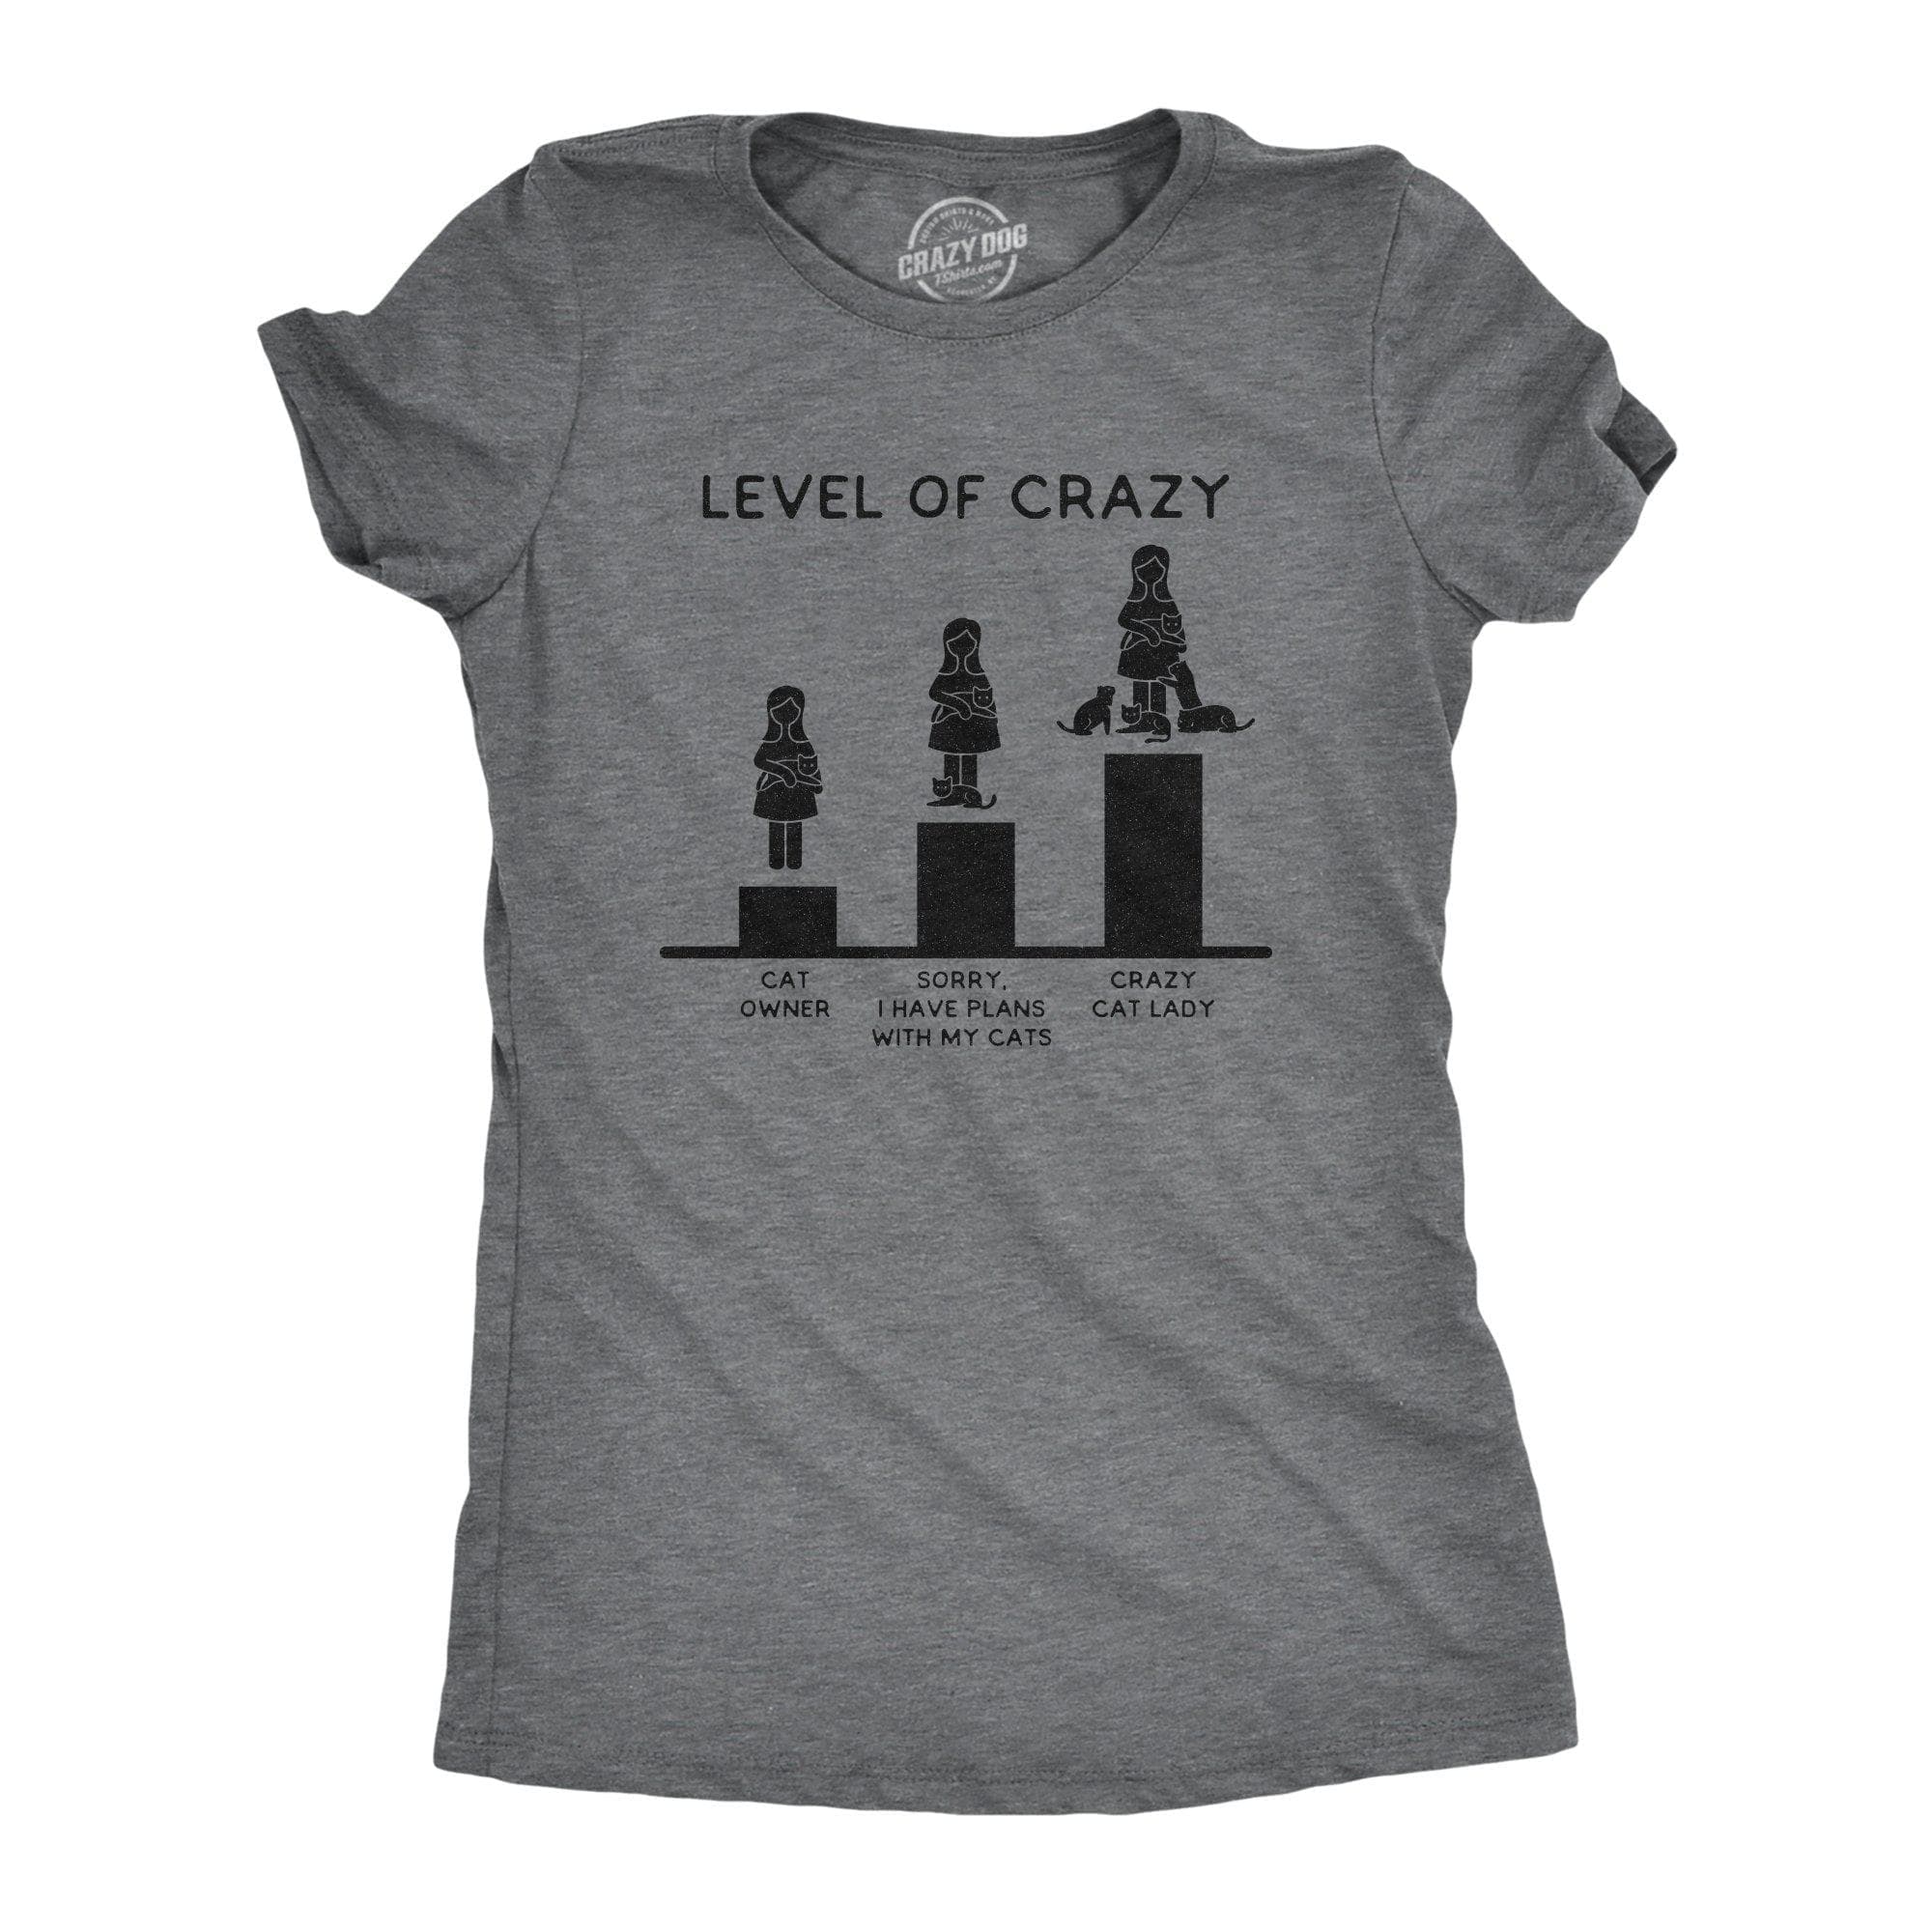 Level Of Crazy: Crazy Cat Lady Women's Tshirt - Crazy Dog T-Shirts